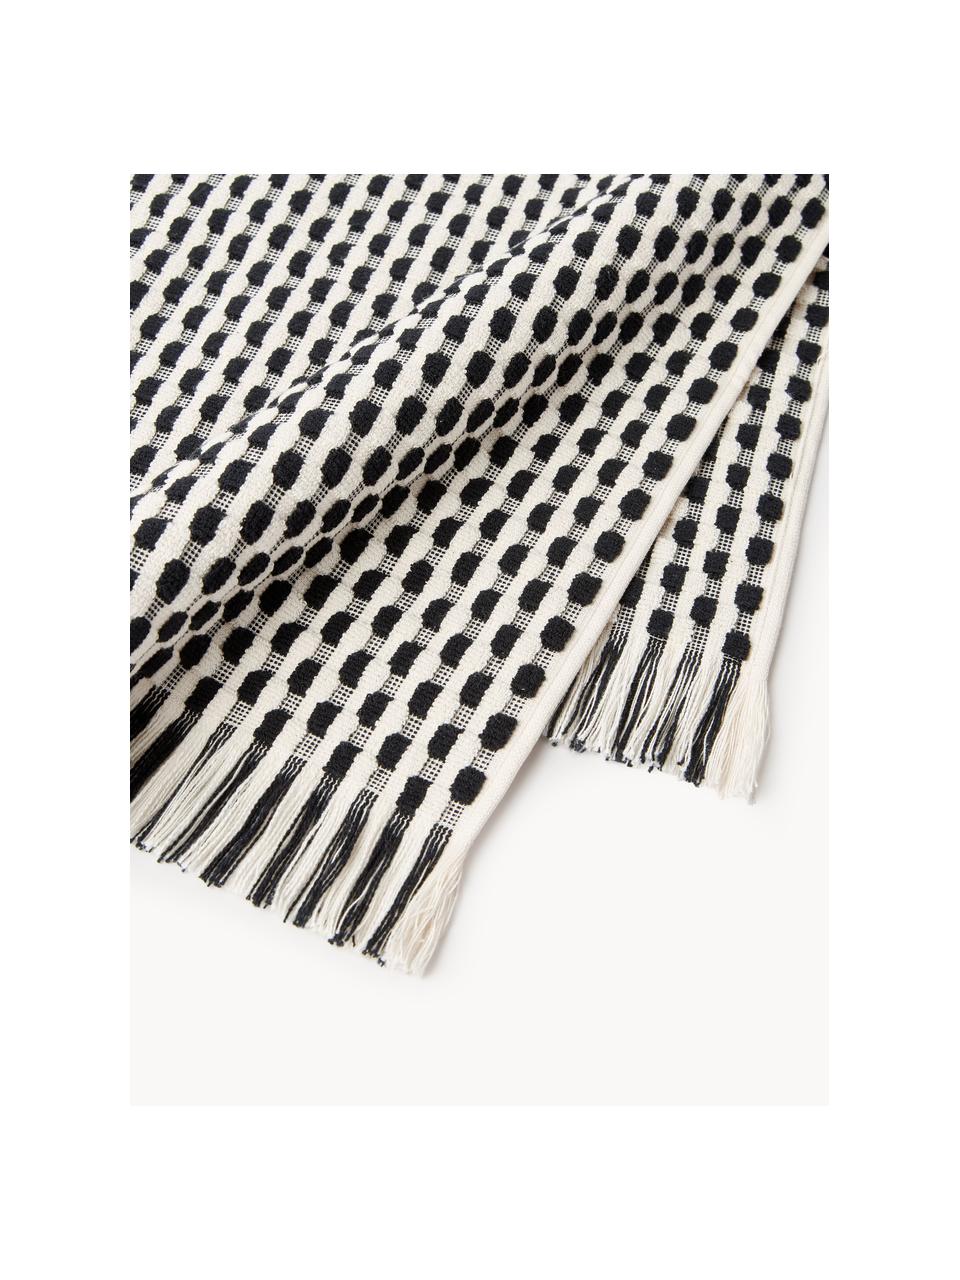 Toalla texturizada Juniper, tamaños diferentes, Blanco Off White, negro, Toalla ducha, An 70 x L 140 cm